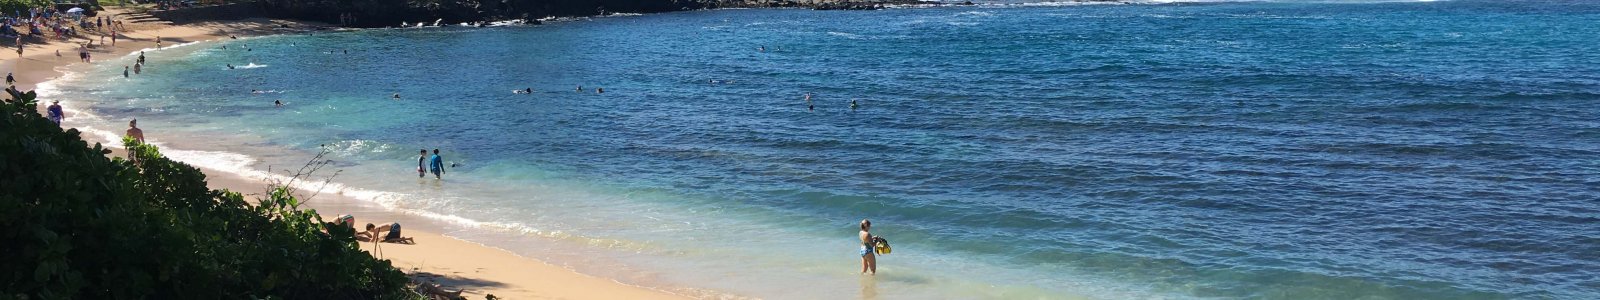 Kapalua Vacation Rentals & Villas | Maui's Finest